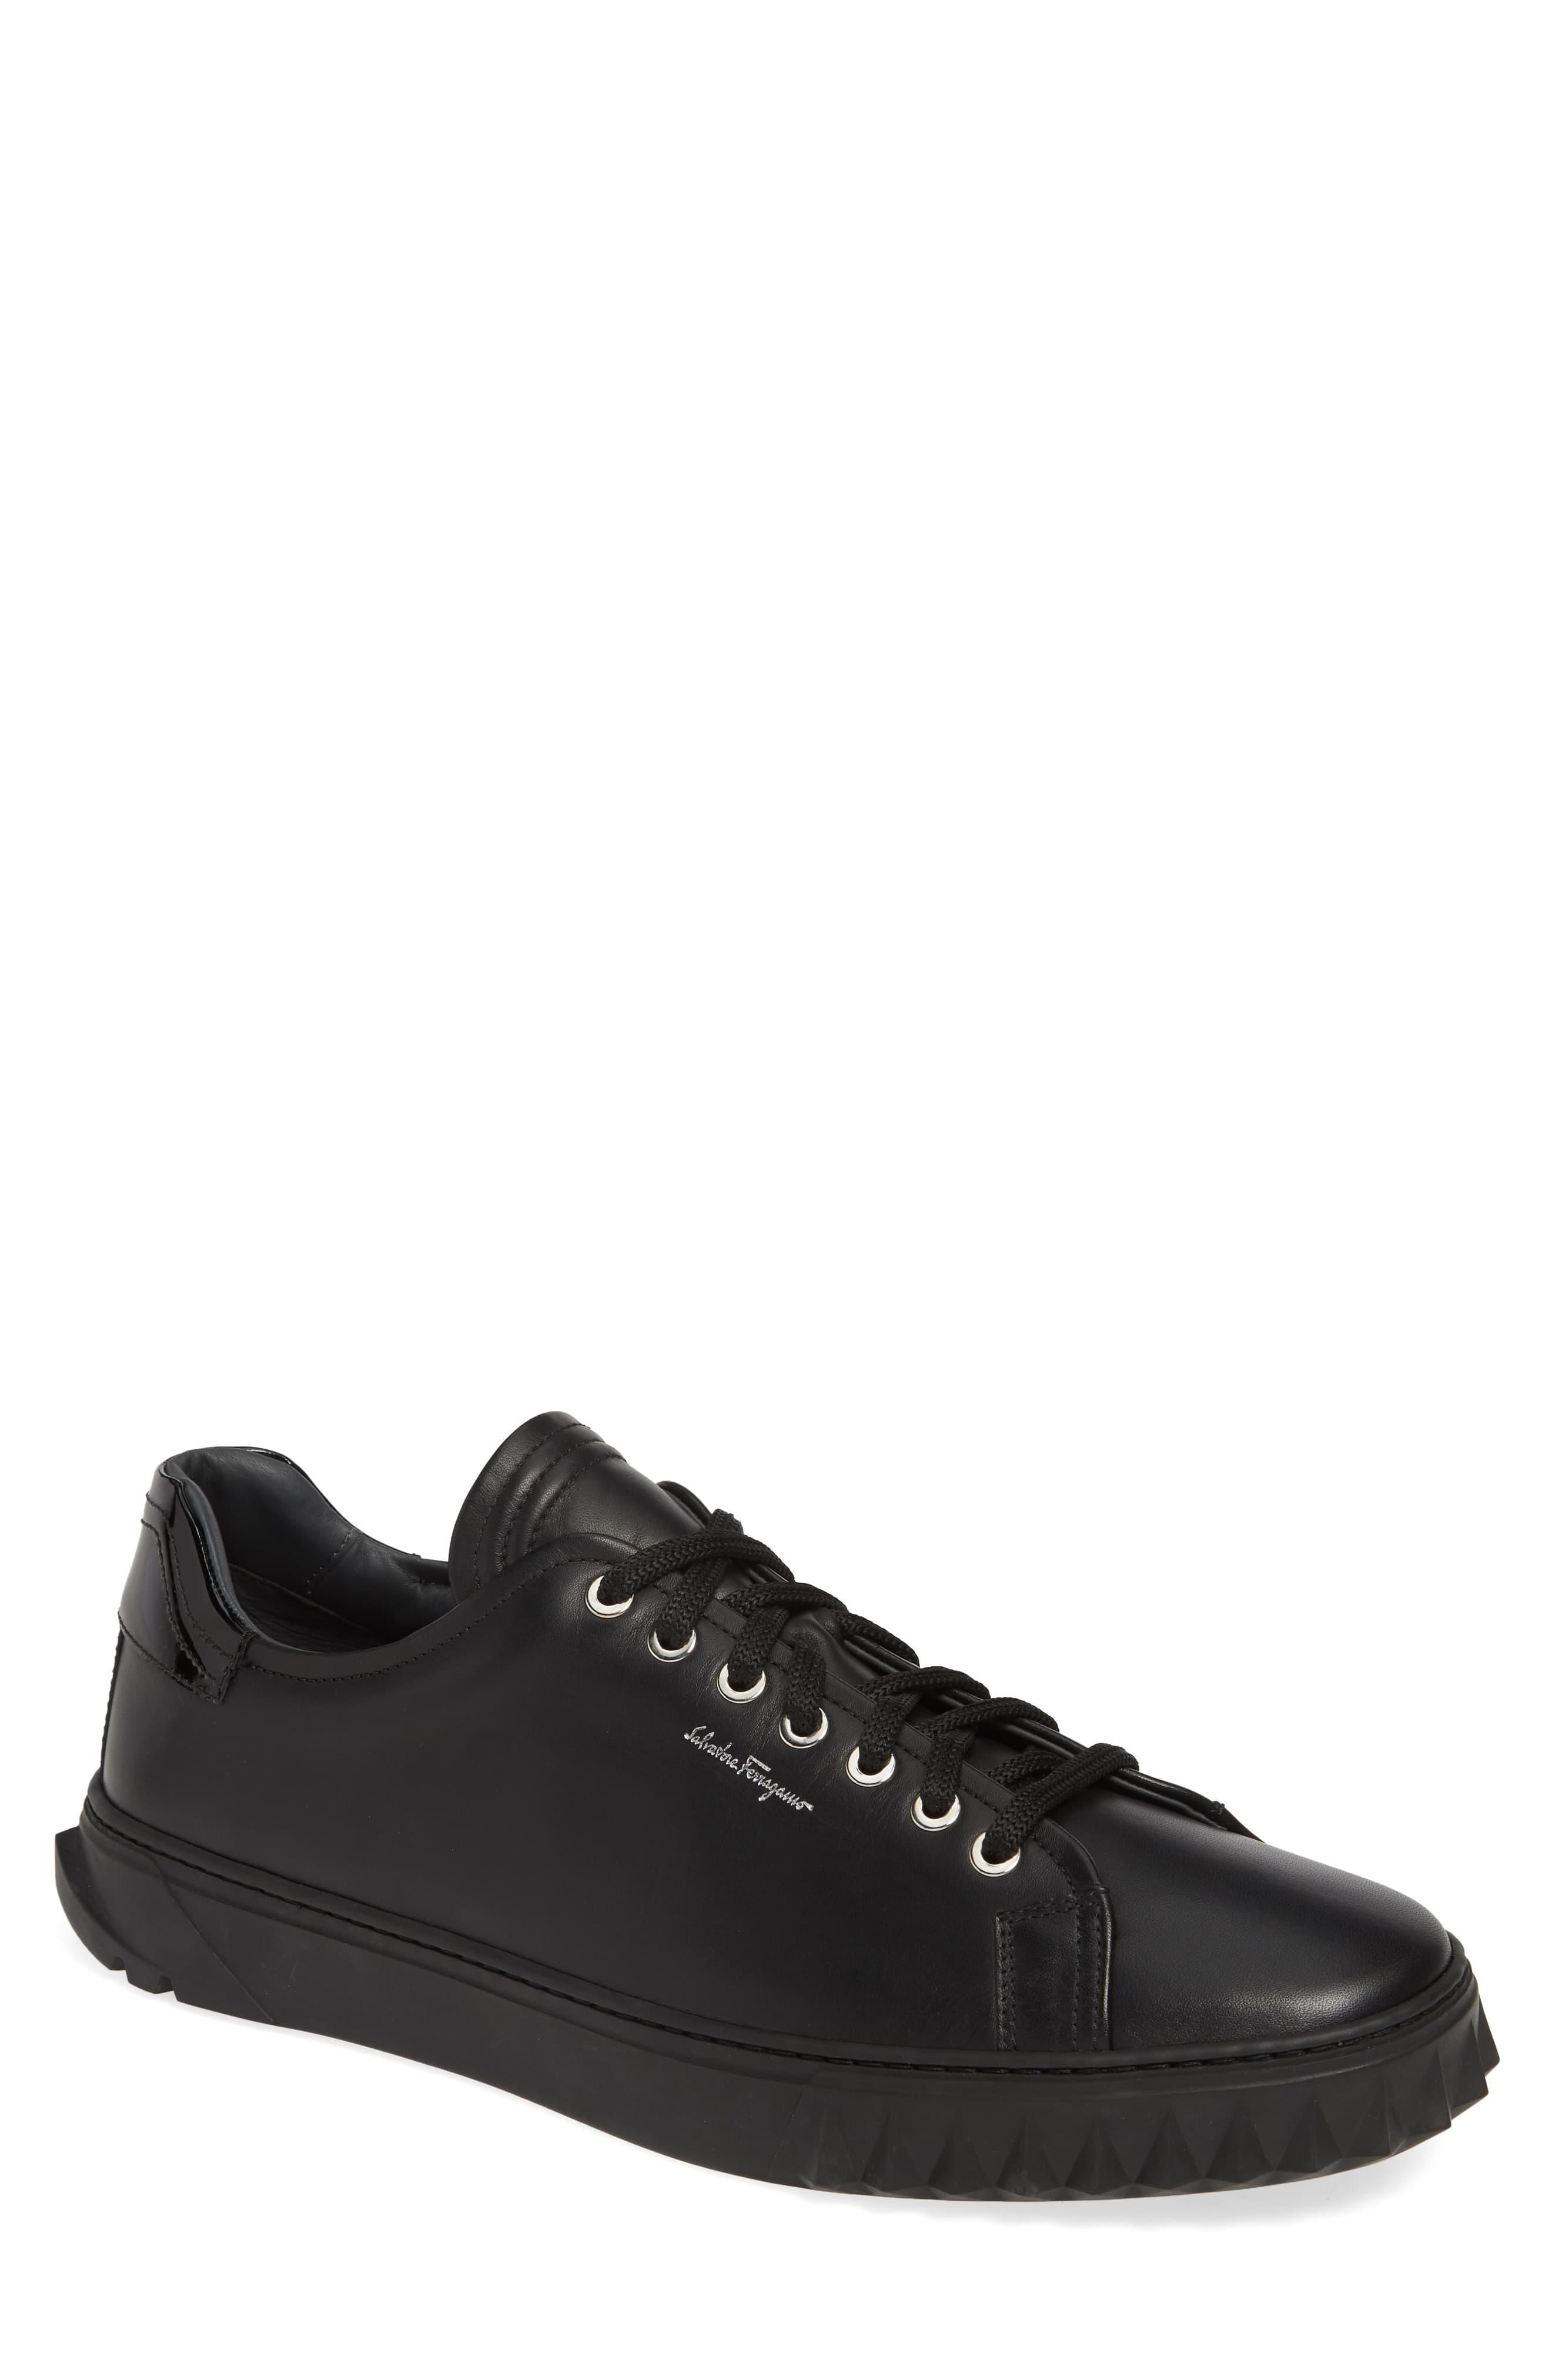 Ferragamo Cube Leather Sneakers in Nero/Black (Black) for Men - Save 5% ...